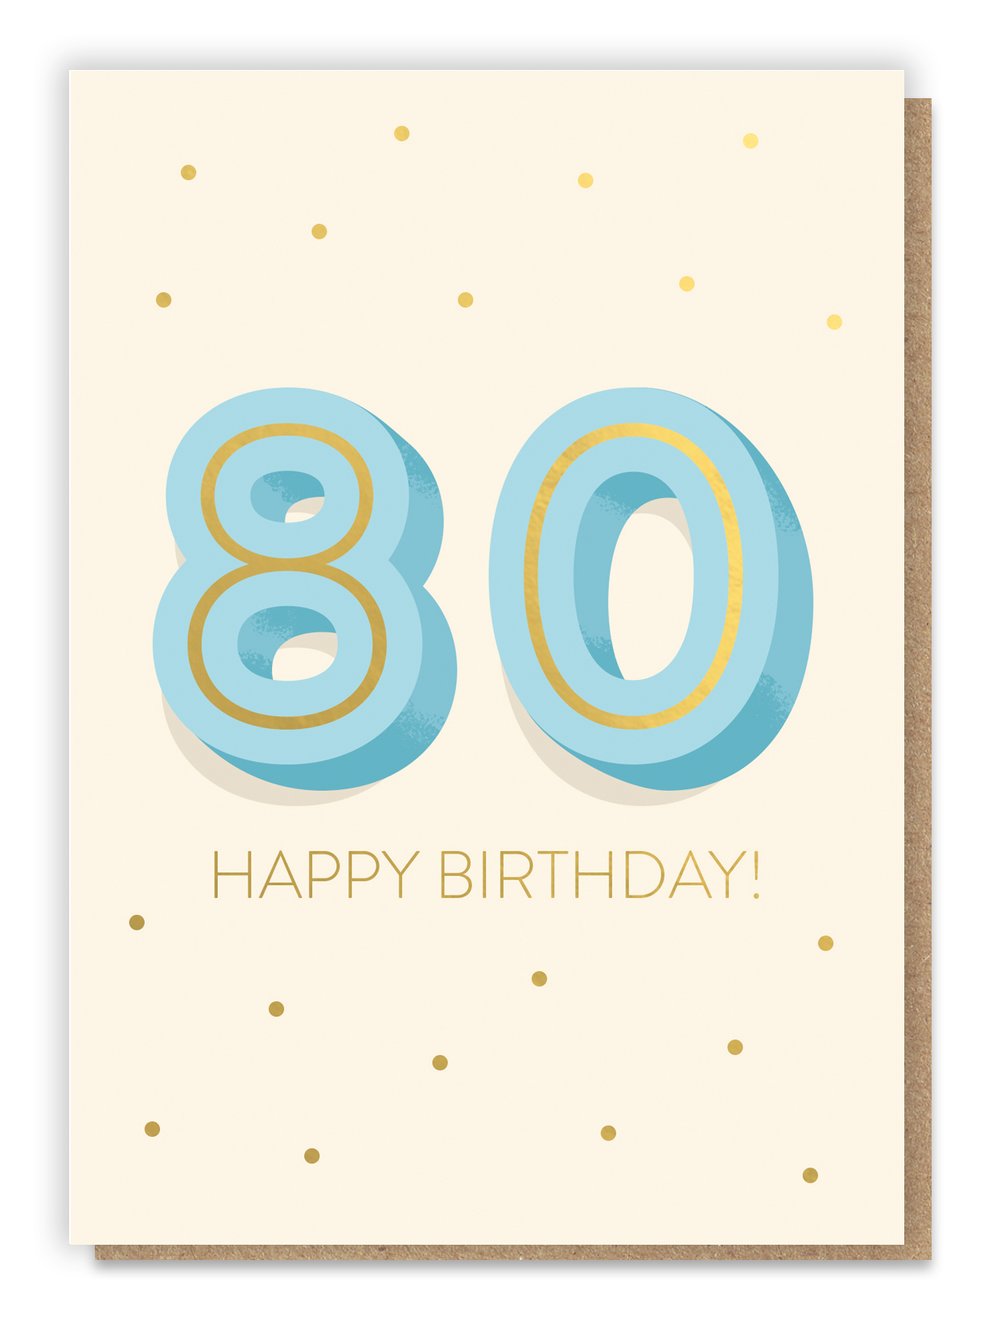 Big 8-0 Birthday Card - Age 80